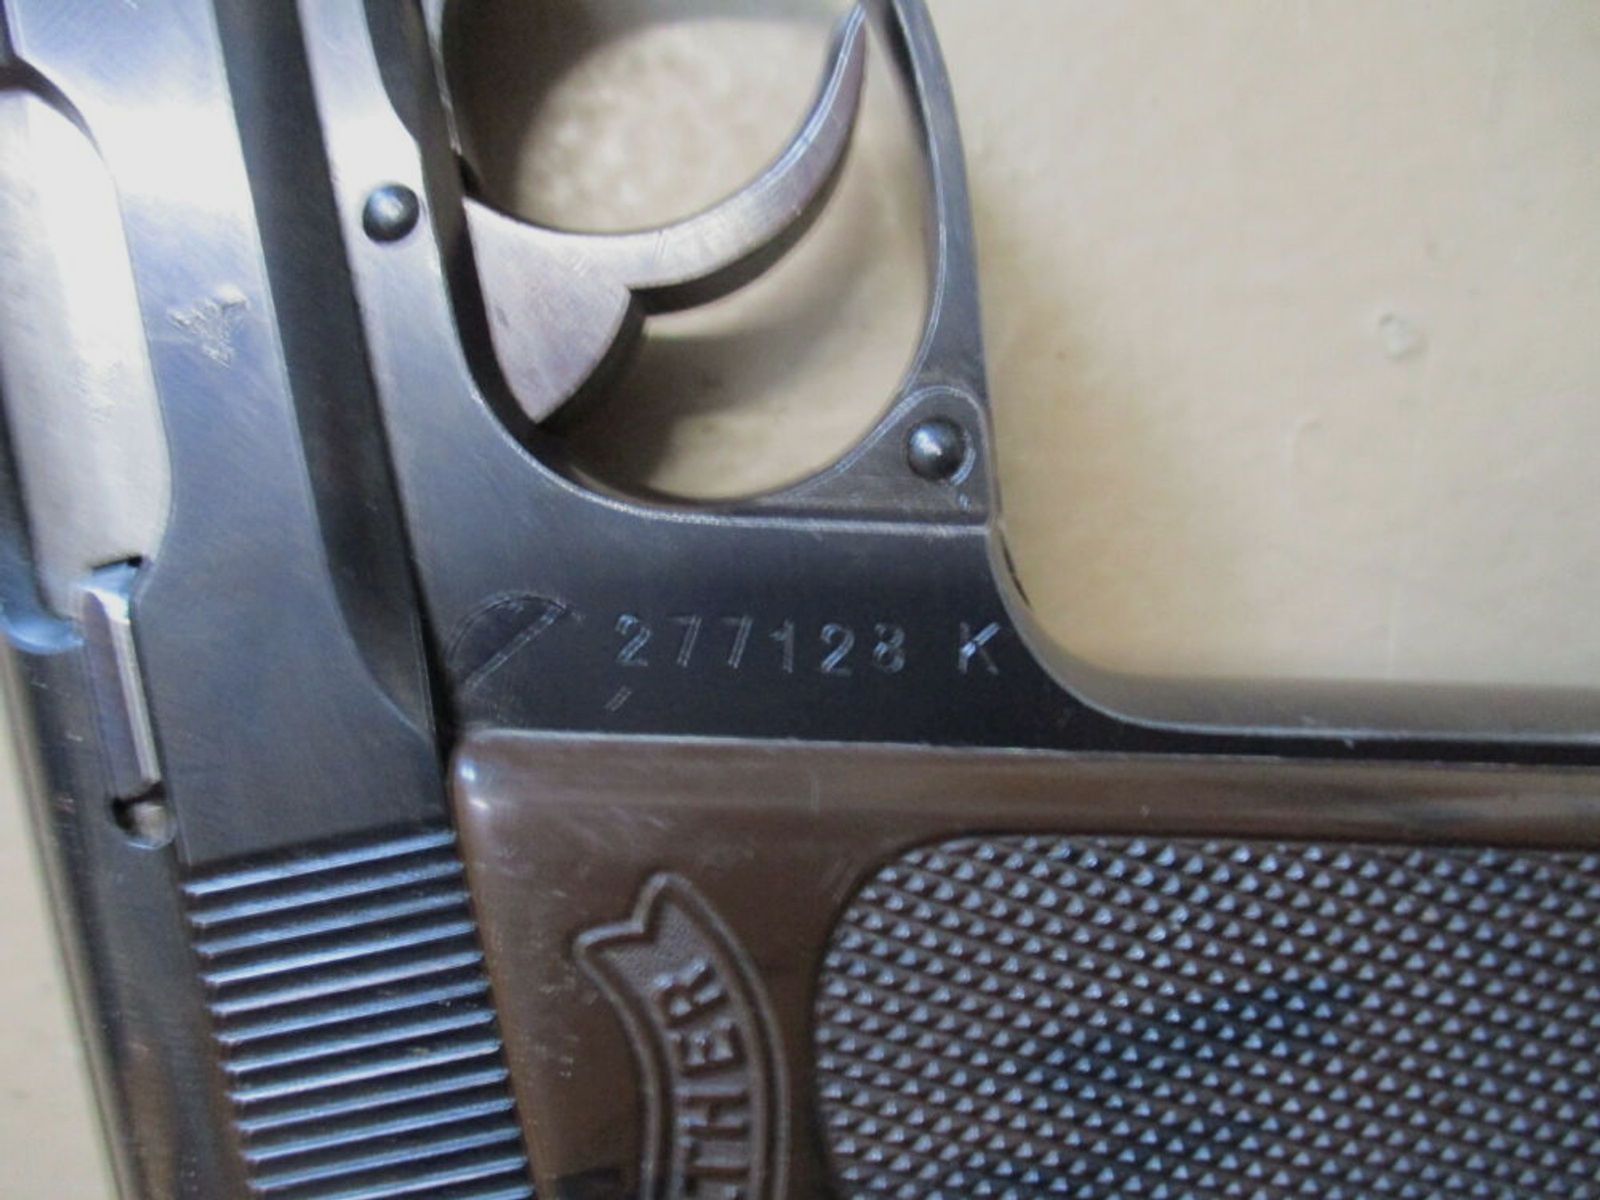 Pistole Walther Zella Mehlis Mod. PPK 7,65 mm ZM Zivil	 PPK